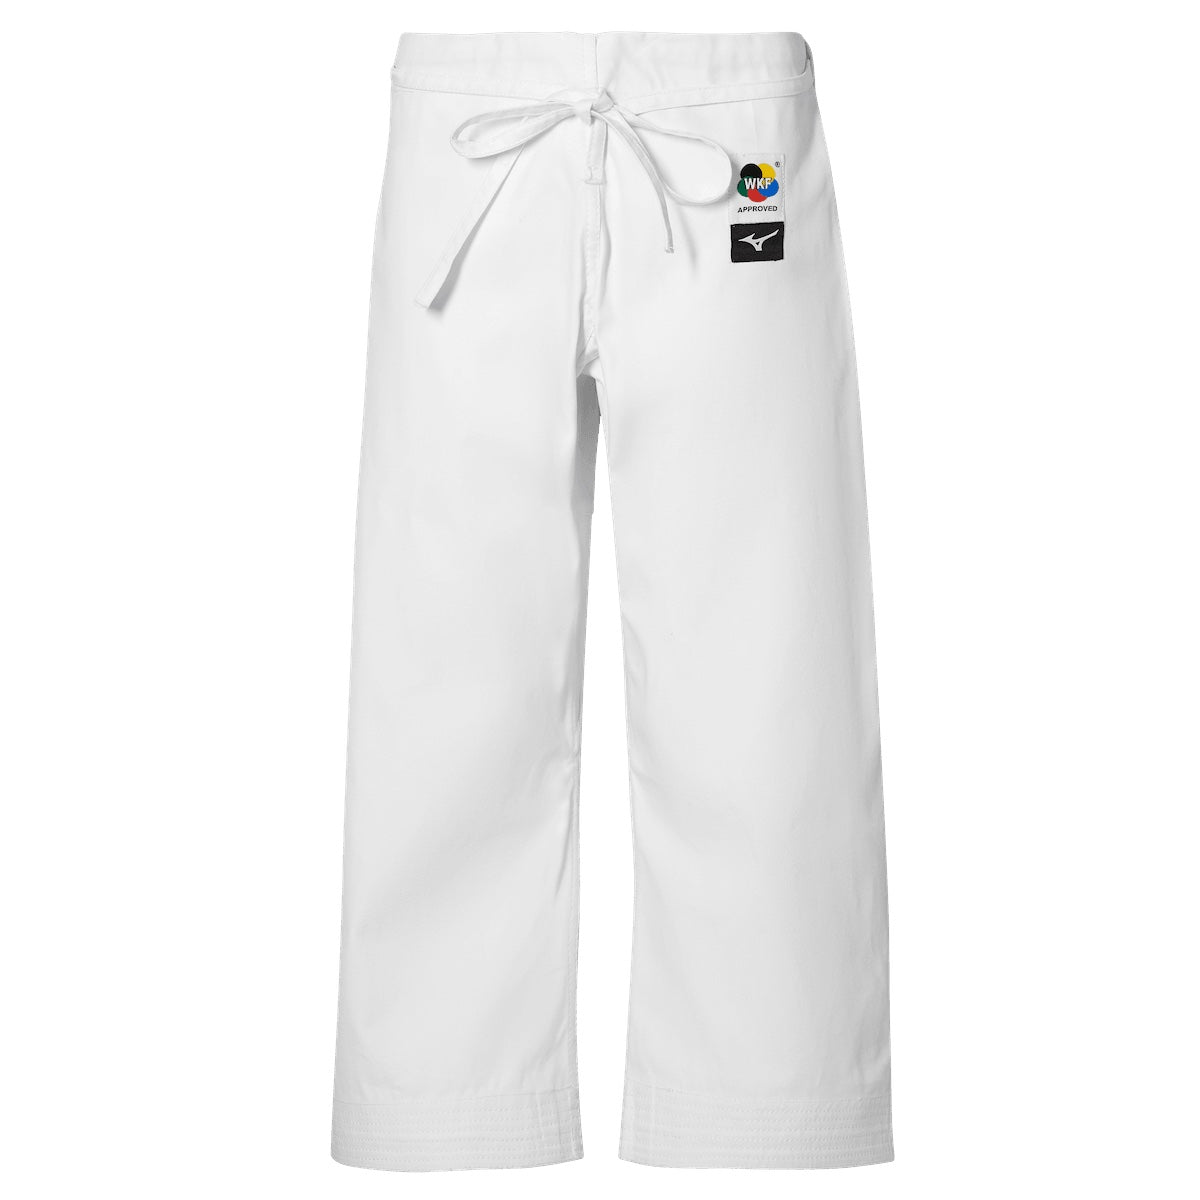 Pantalon de Karate Mizuno Kata Kime WKF - Blanc